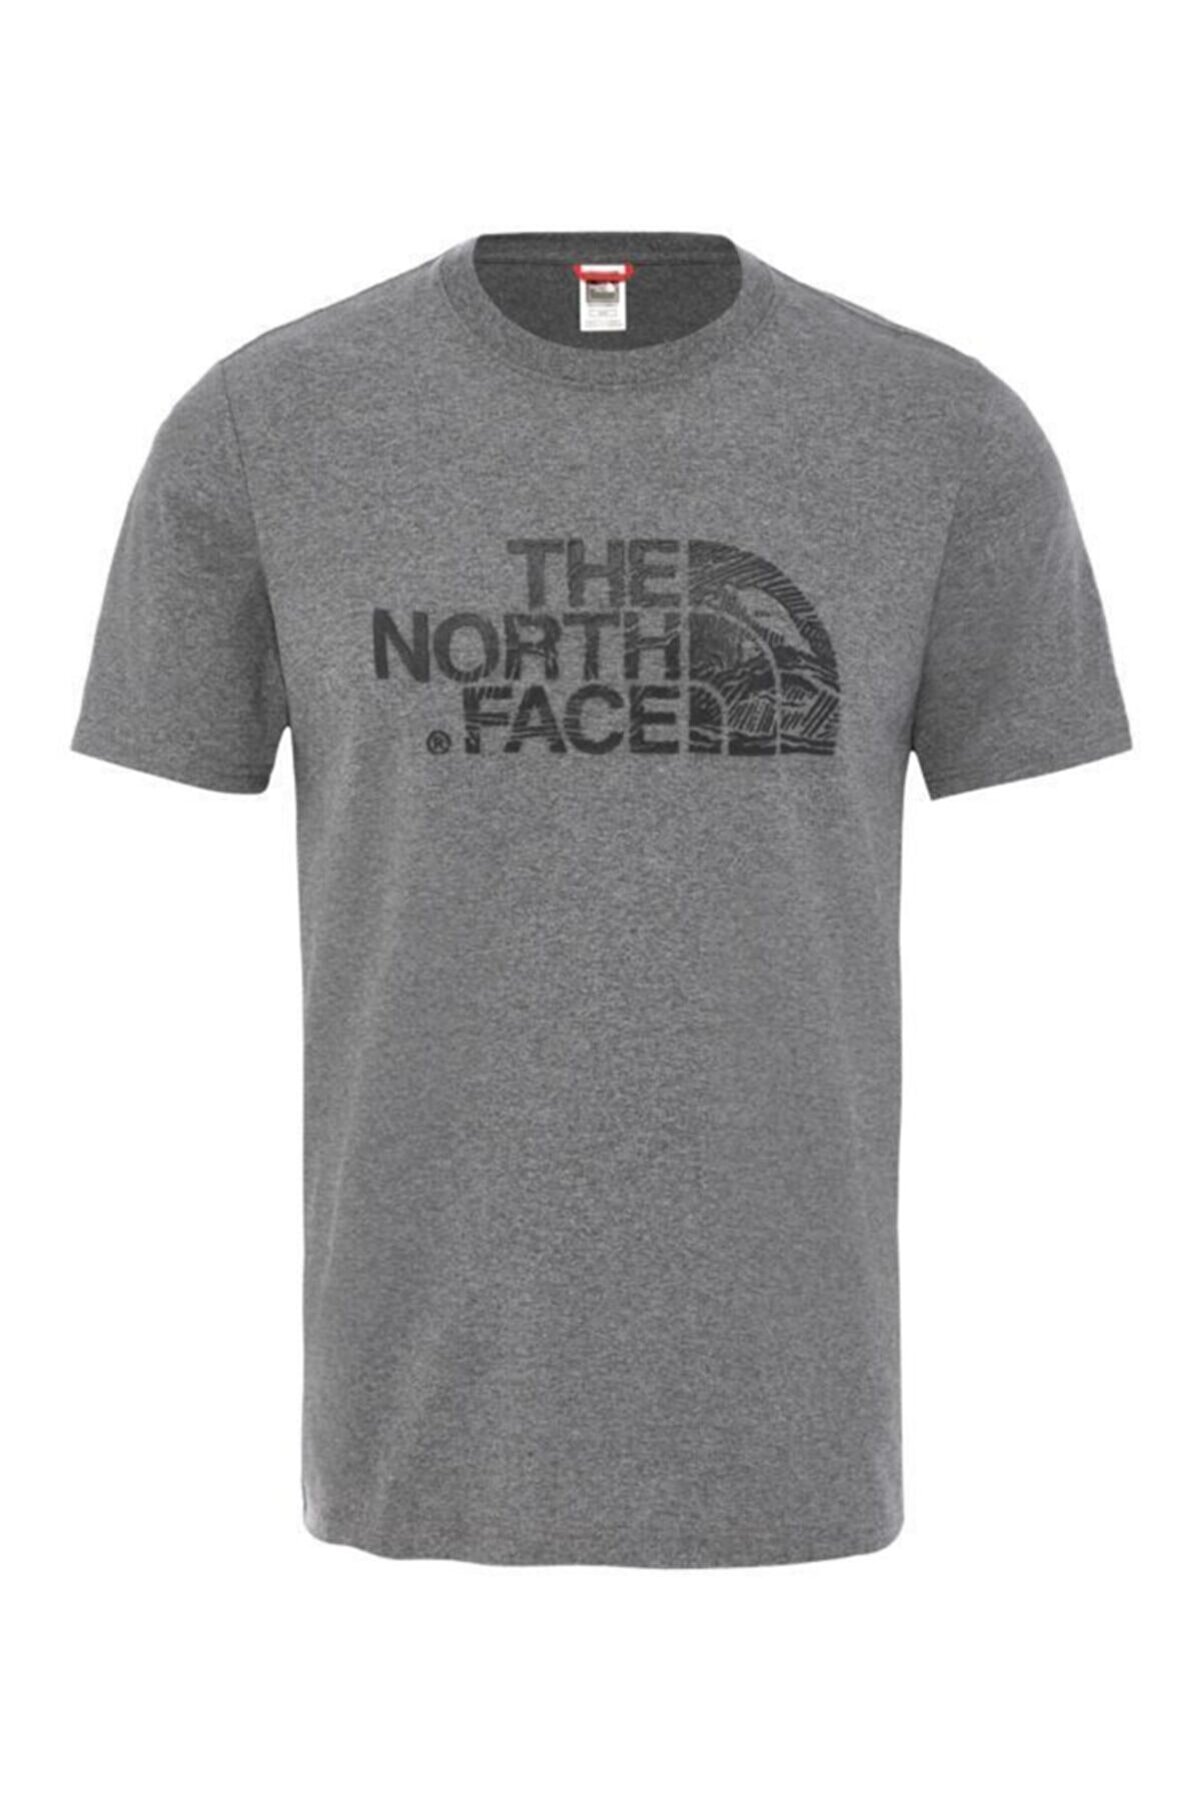 The North Face Woodcut Dome Erkek T-shirt Gri